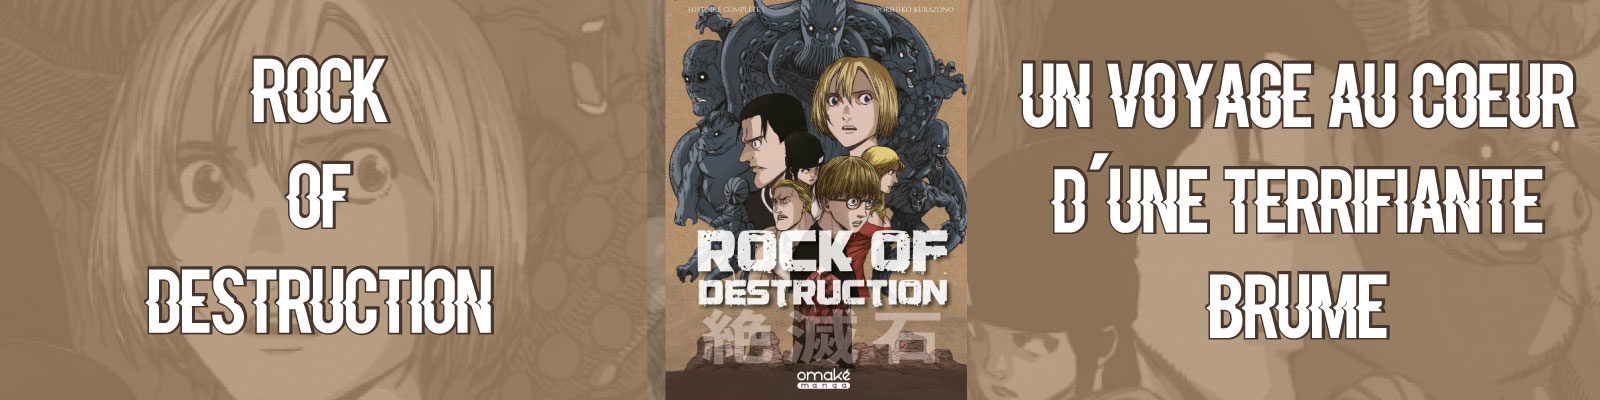 Rock of destruction